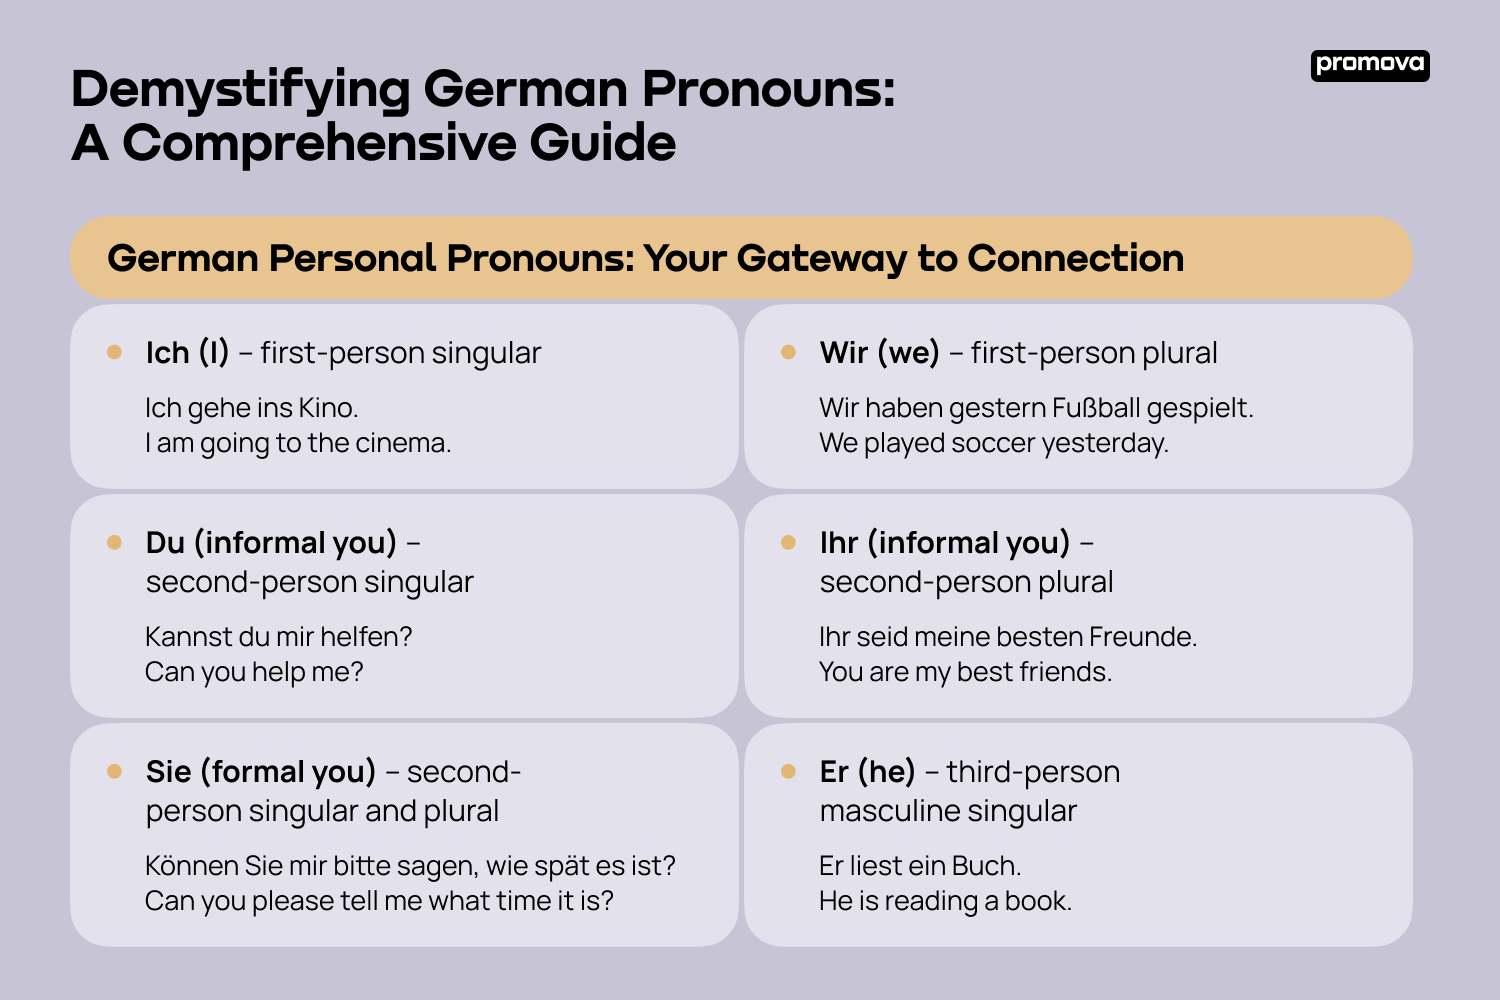 Discover German Personal Pronouns